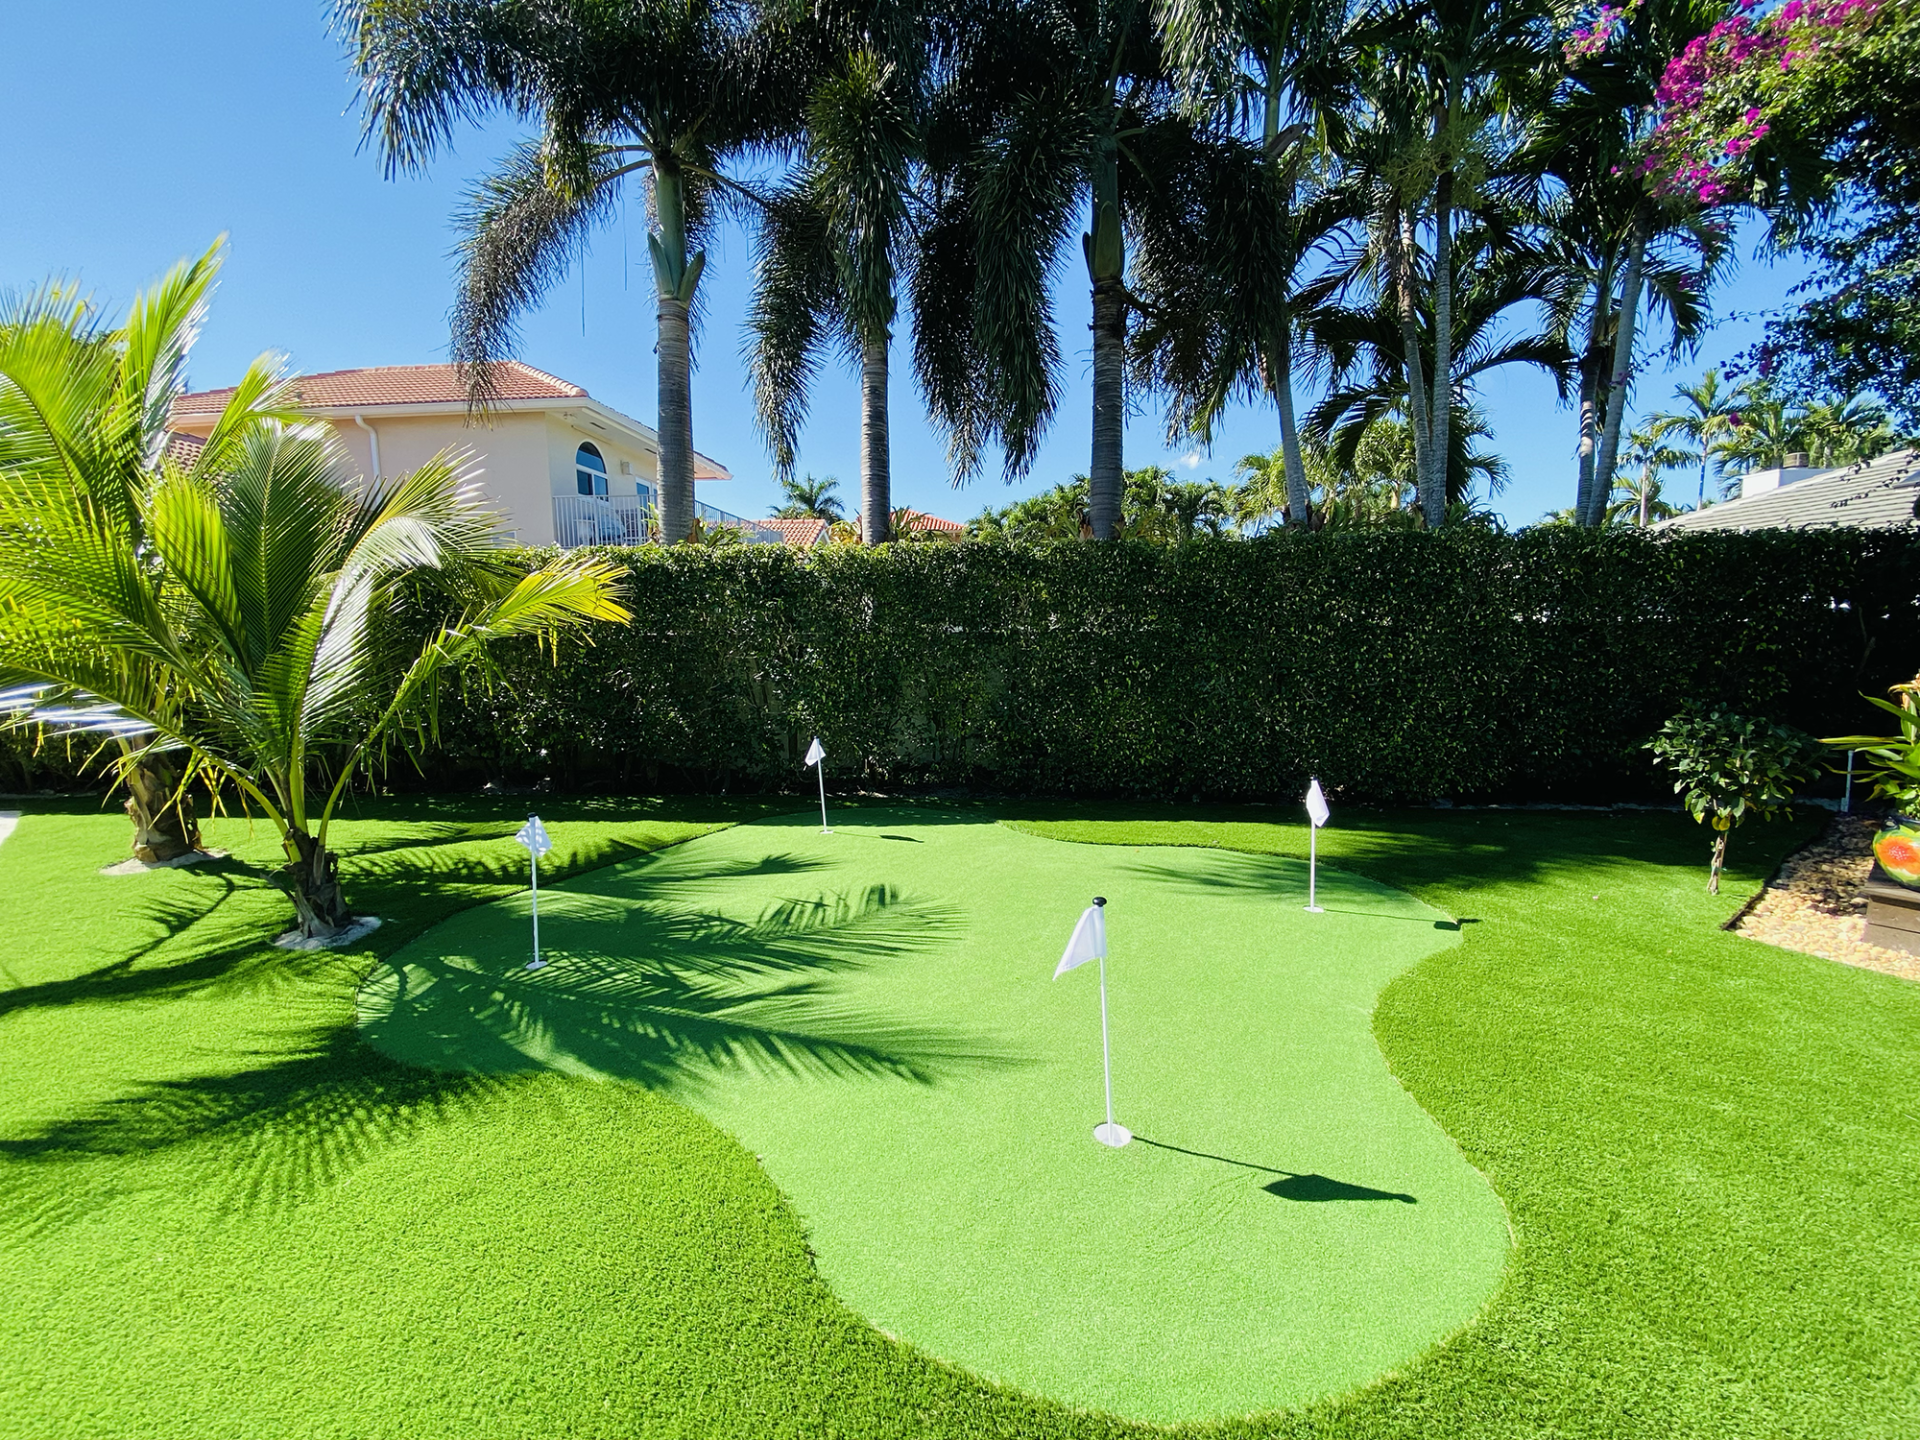 Vista Green Joins Easygrass!  EasyGrass : Artificial Grass and Turf  Supplier and Installer - Miami